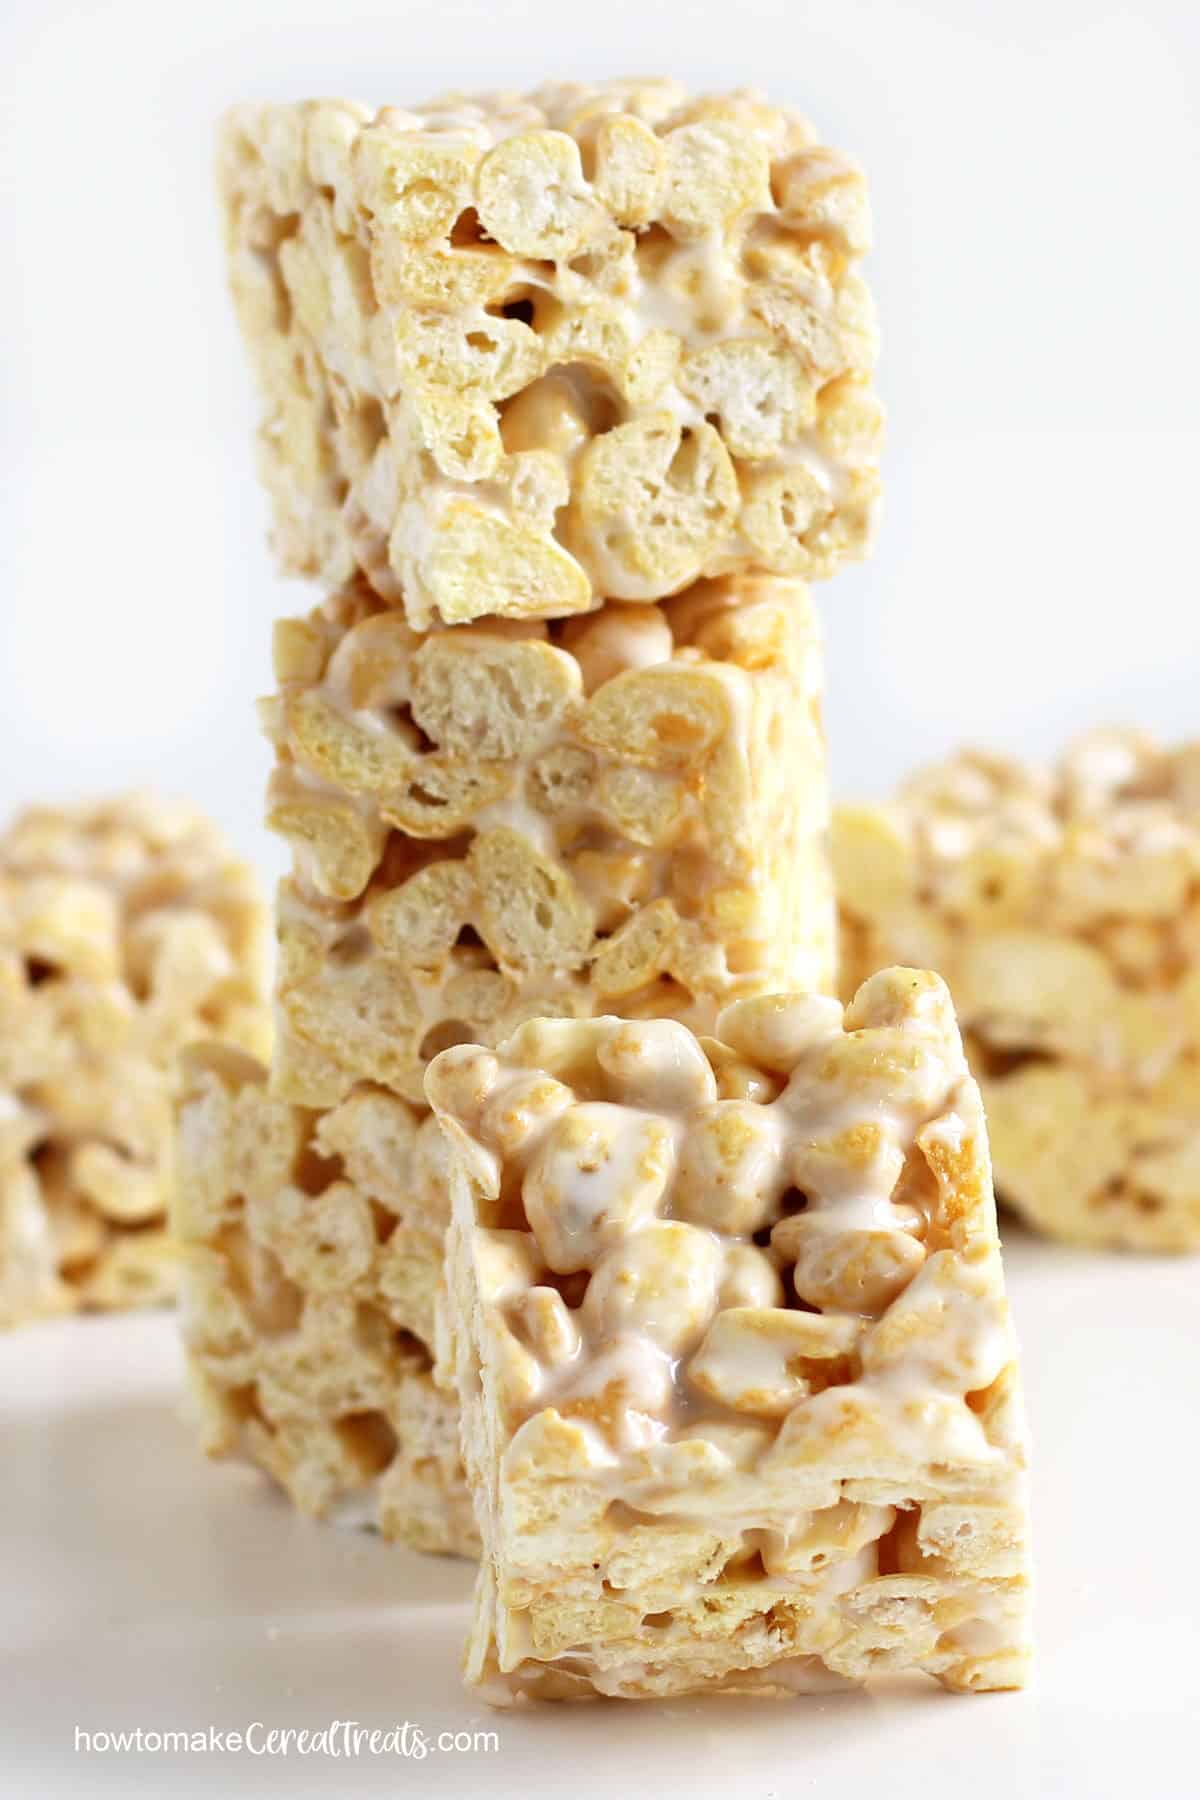 Kellogg's Corn Pops Cereal Treats